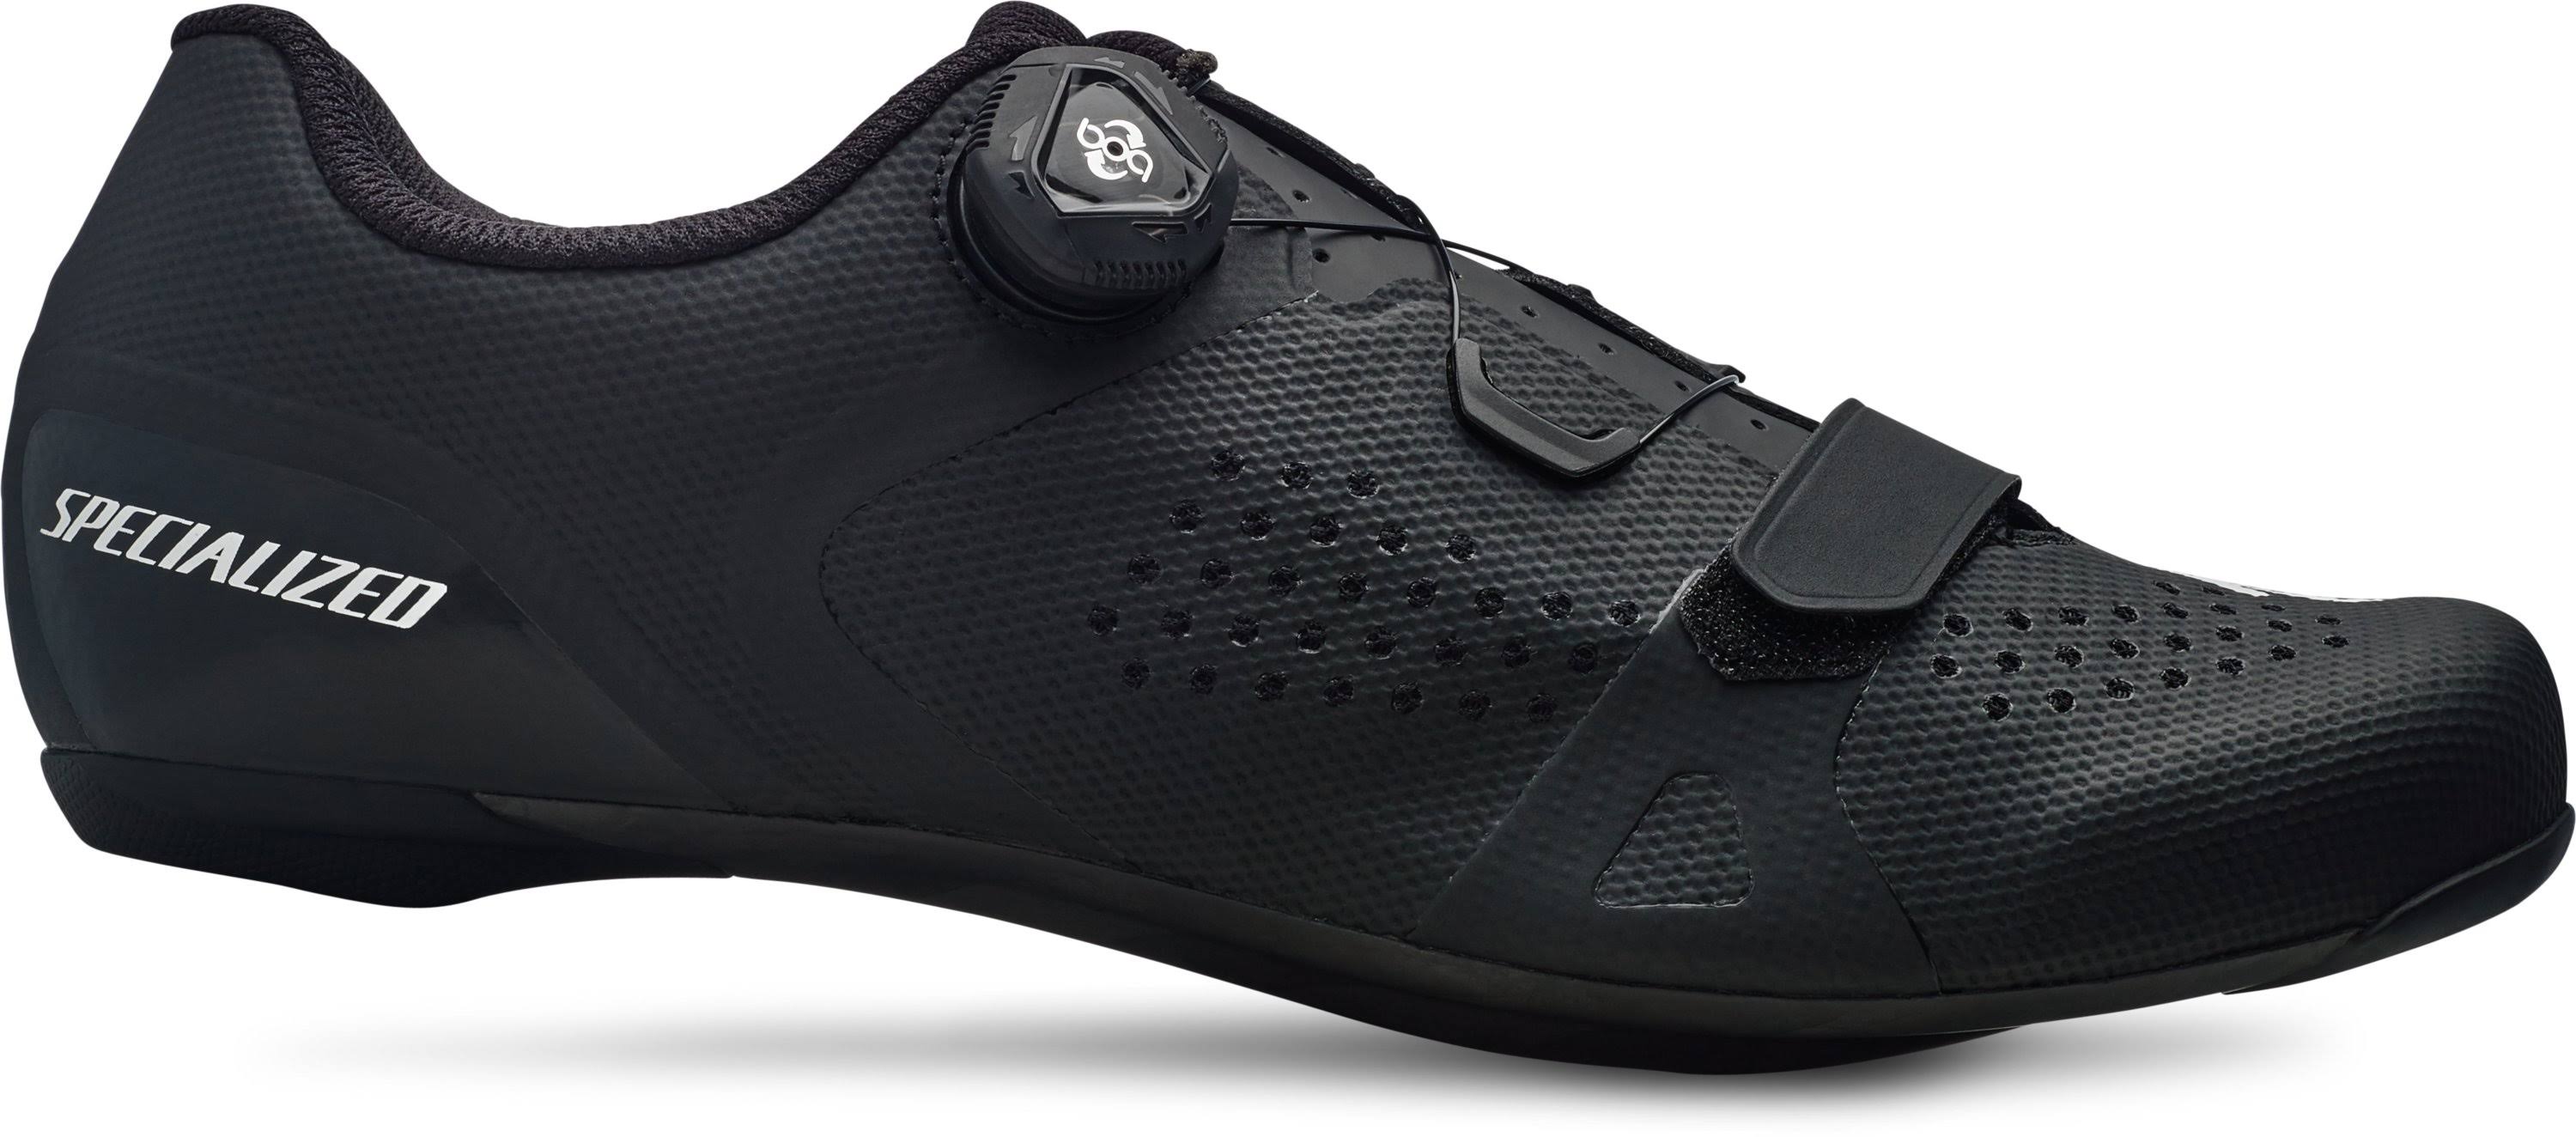 Specialized Torch 2.0 Bike Road Shoes - Black, 41 EU